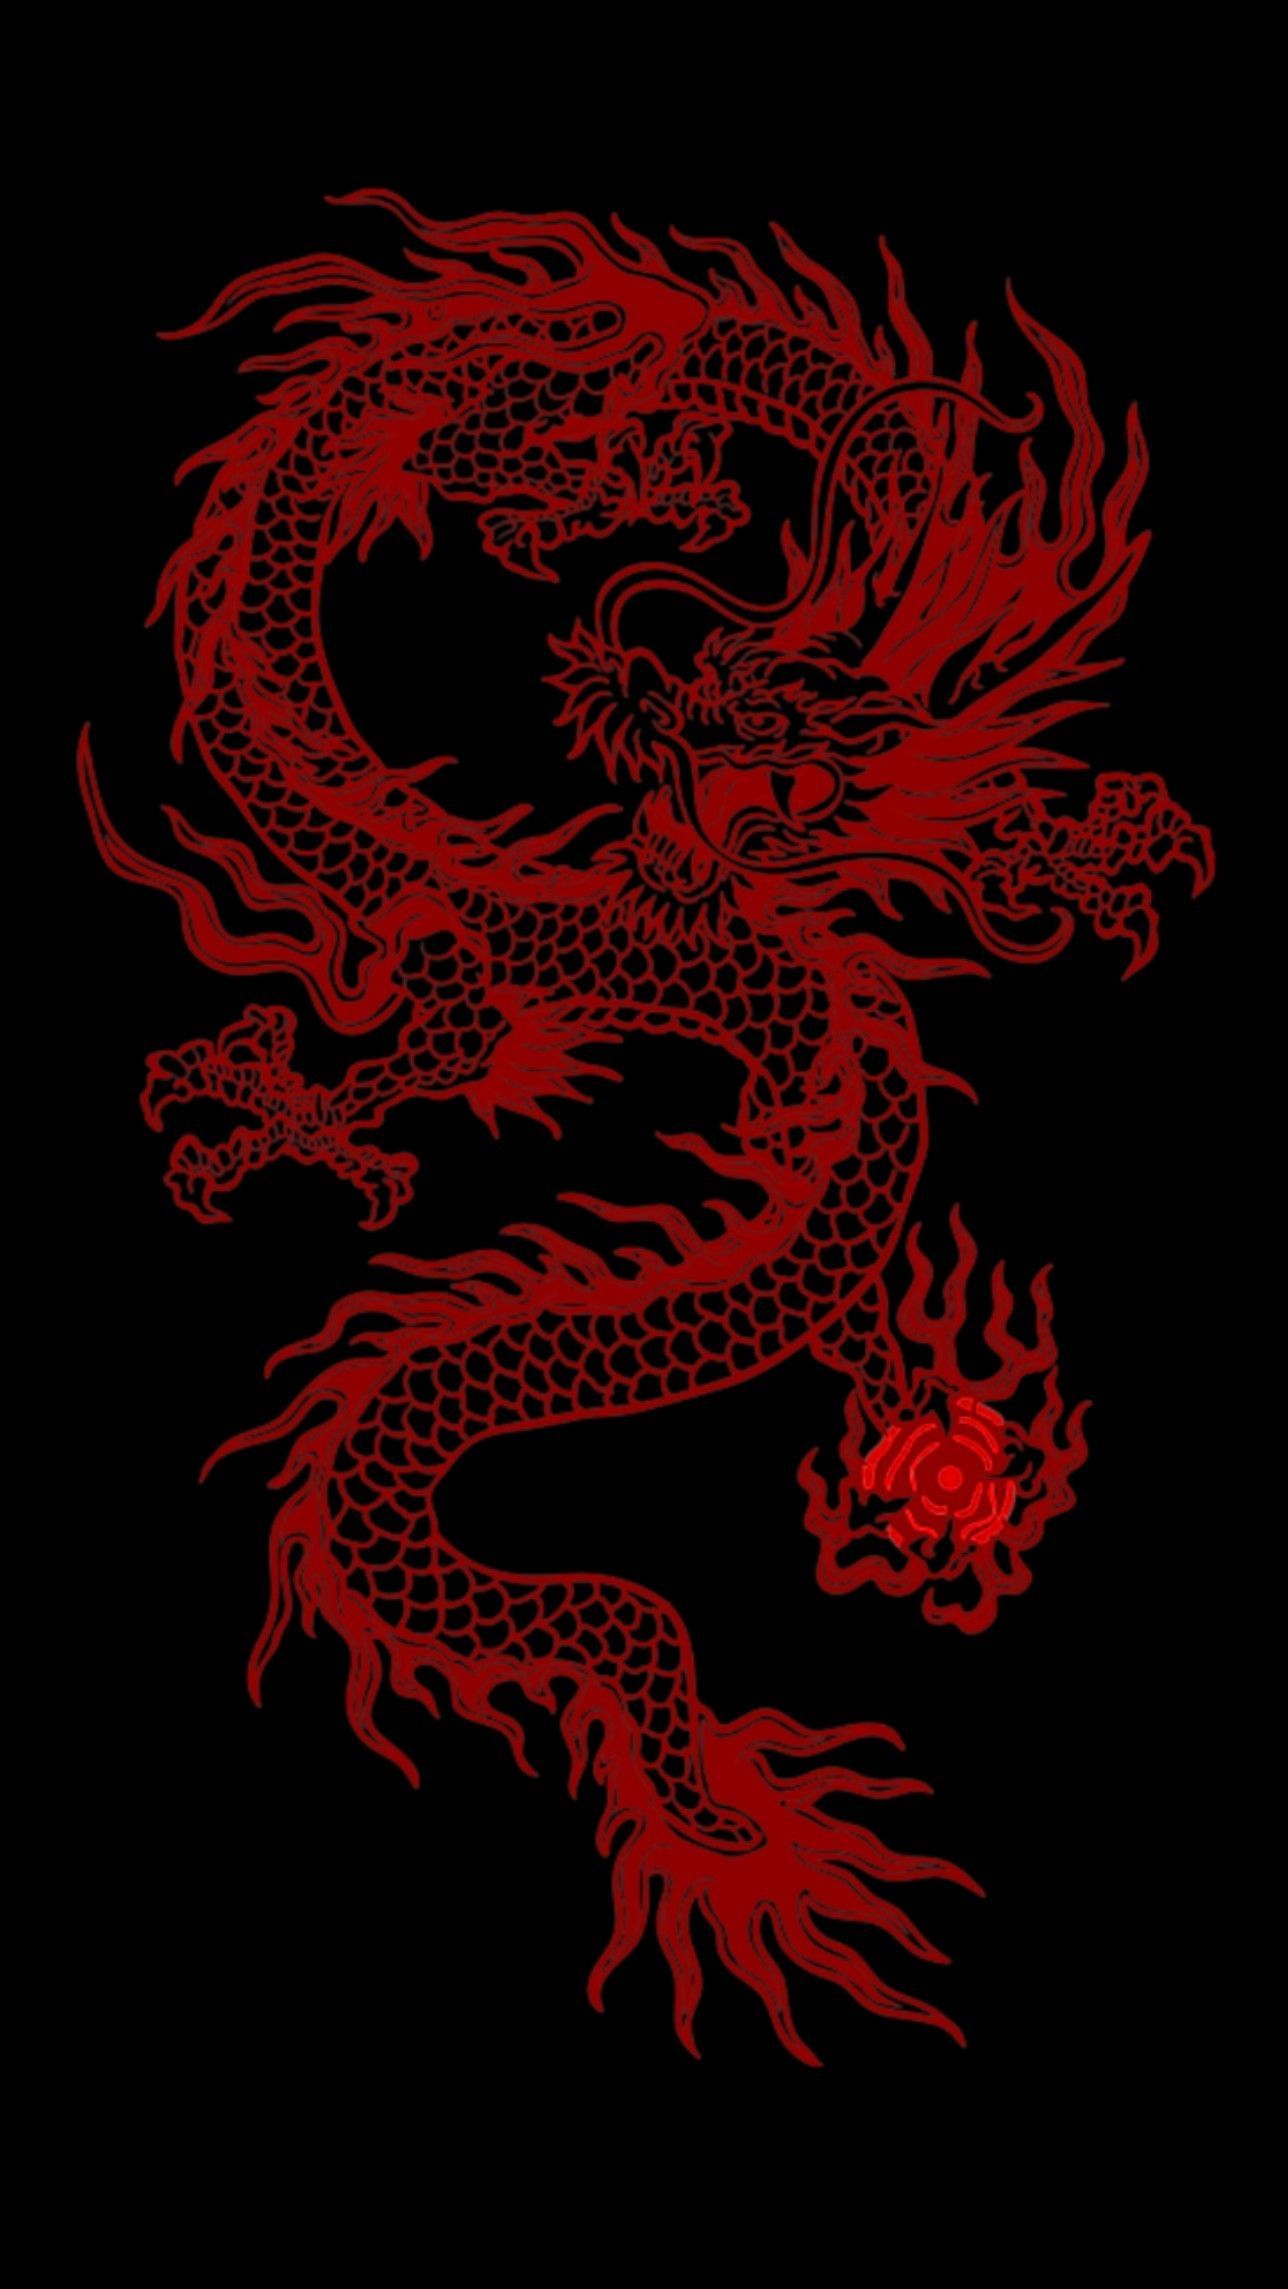 Red Dragon. Dragon wallpaper iphone, Japanese wallpaper iphone, Snake wallpaper